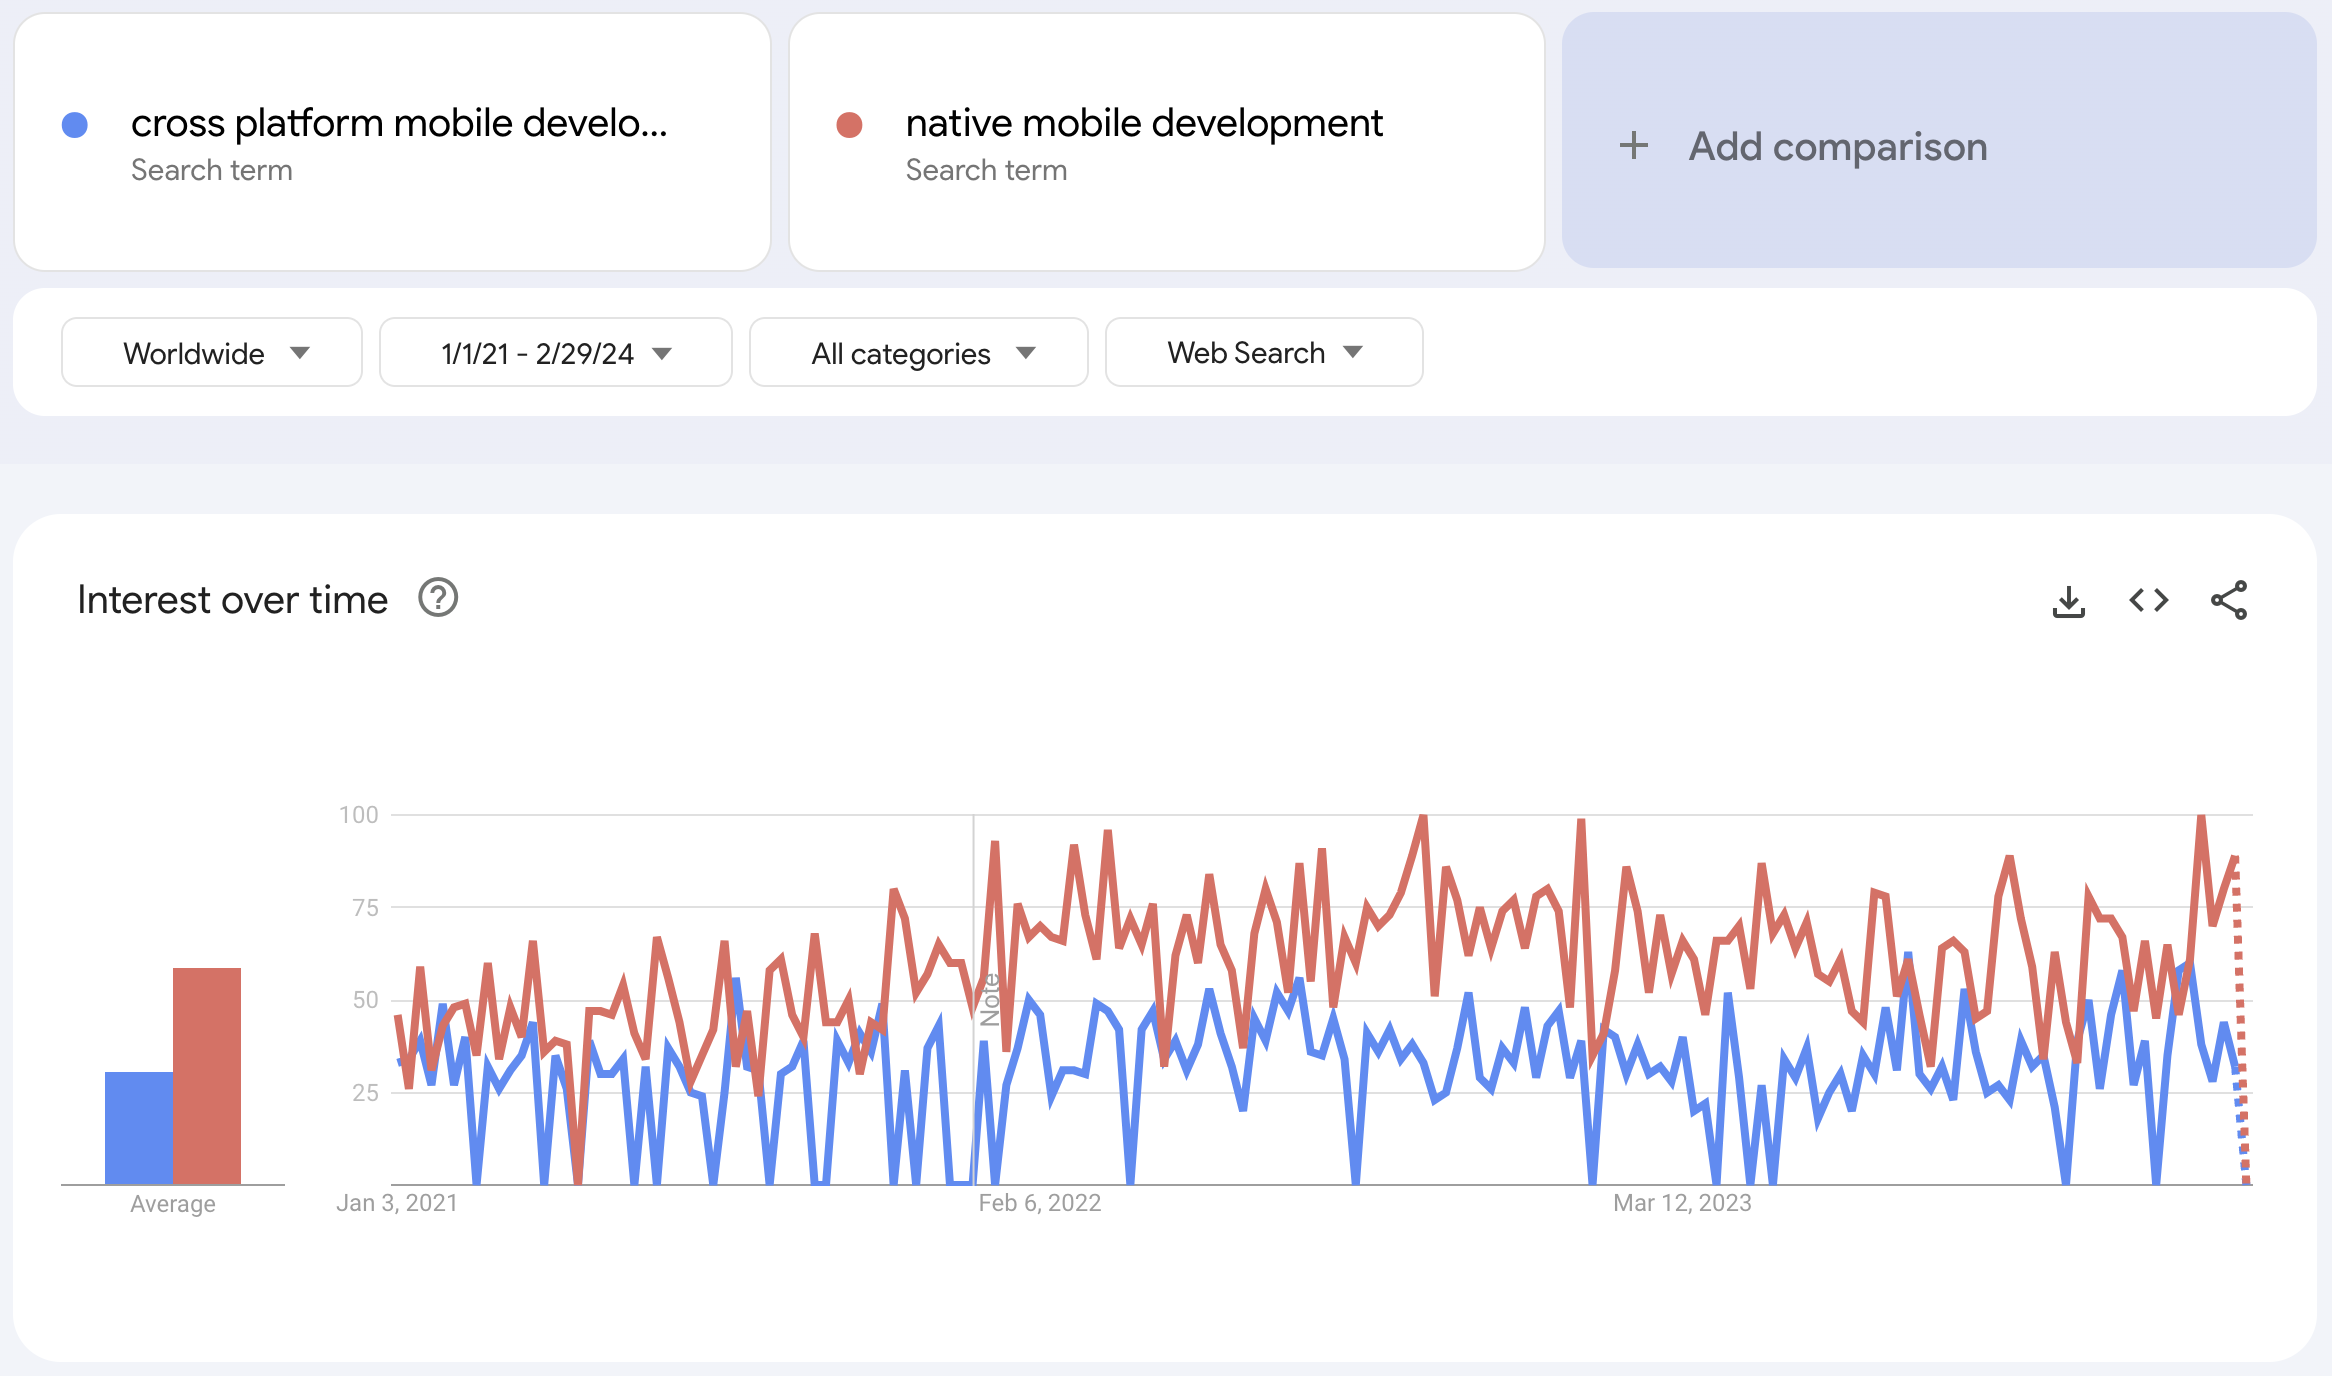 Cross-platform and native mobile development in Google Trends